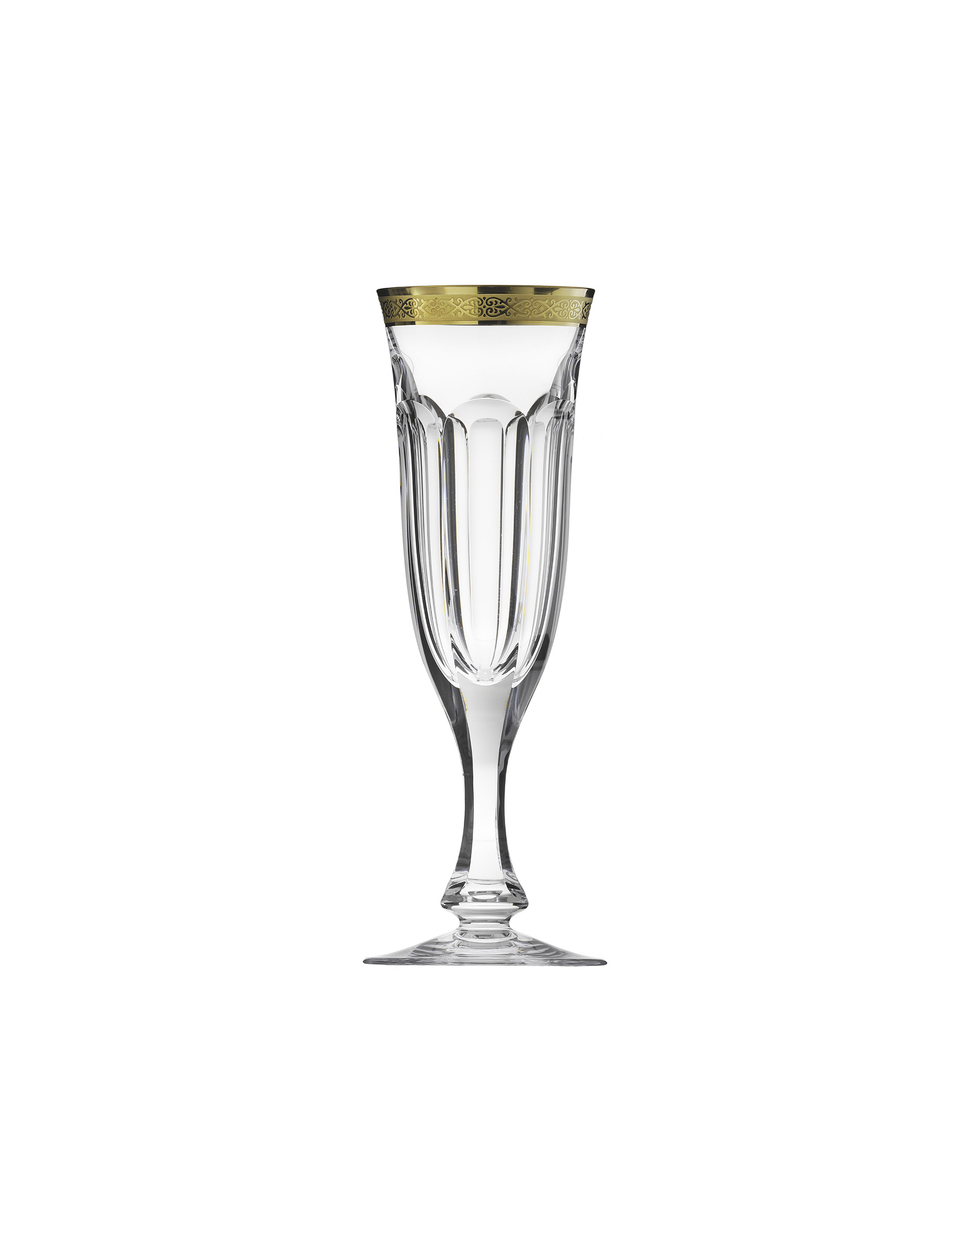 Lady Hamilton champagne glass, 140 ml